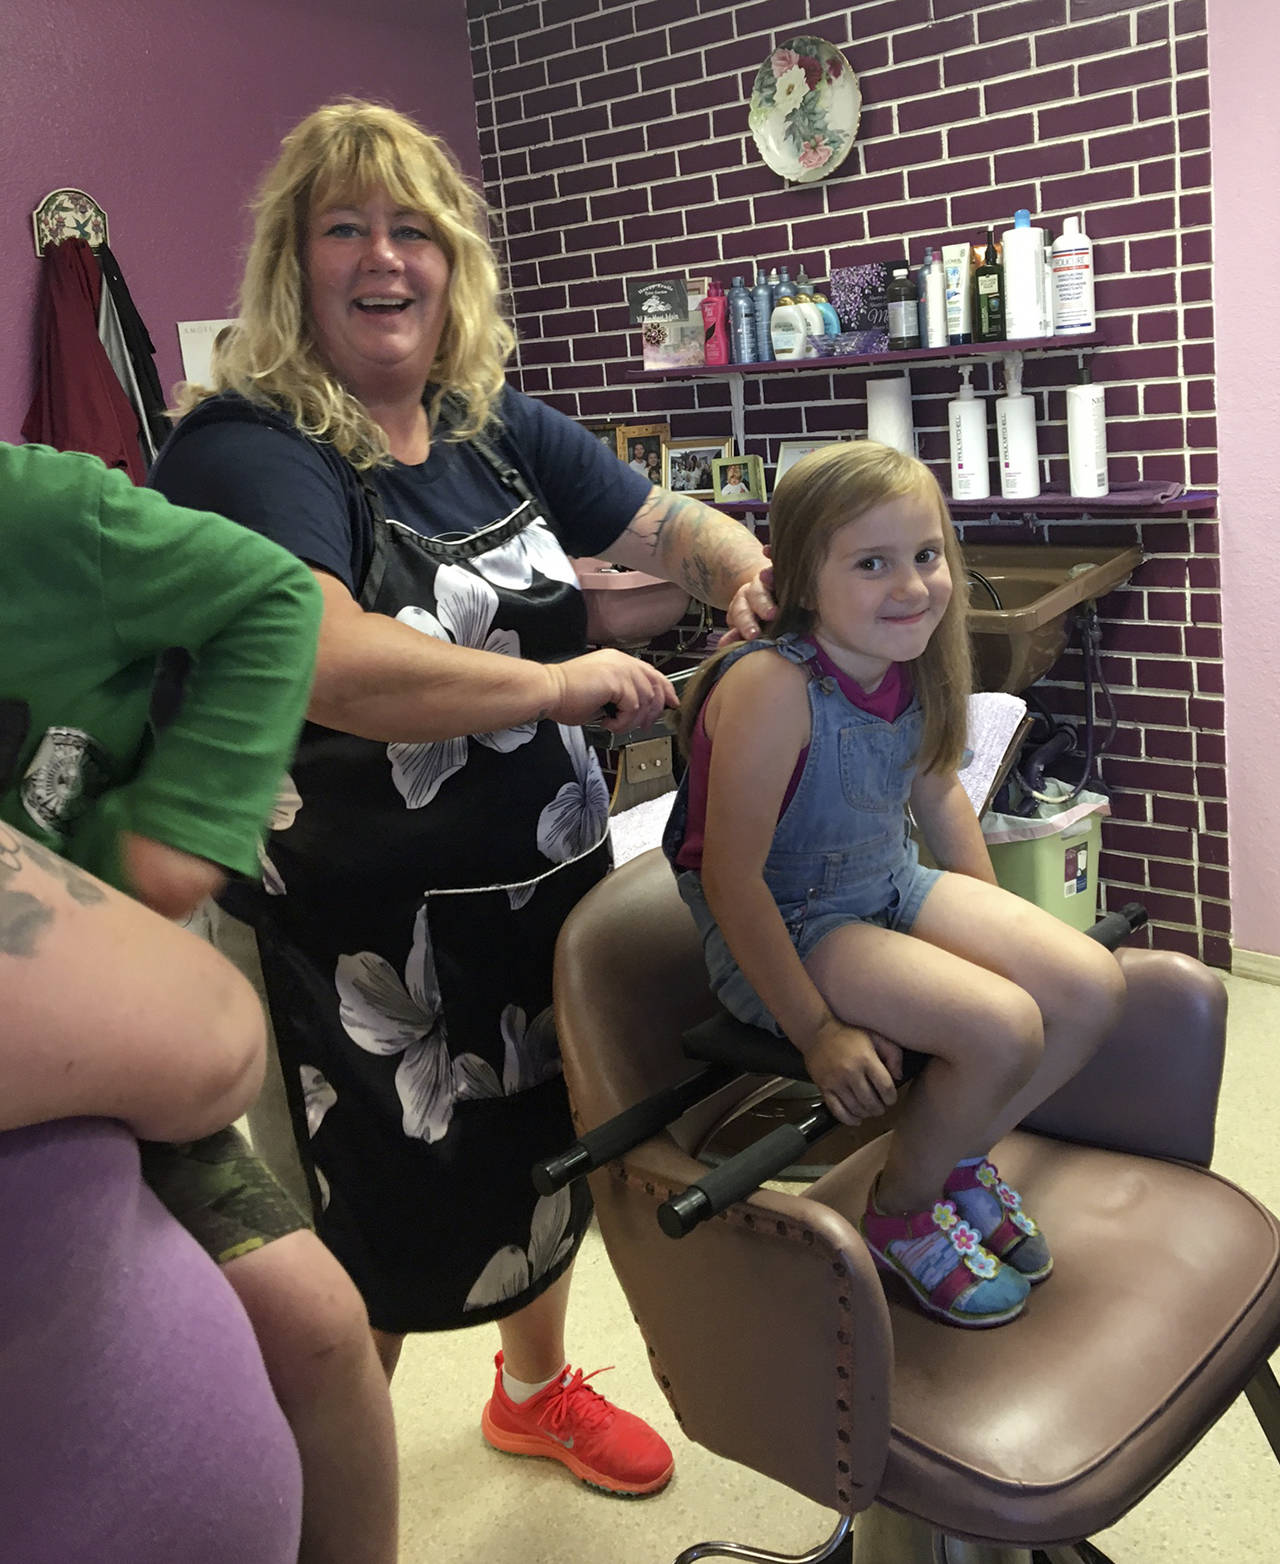 Aberdeen salon donates haircuts